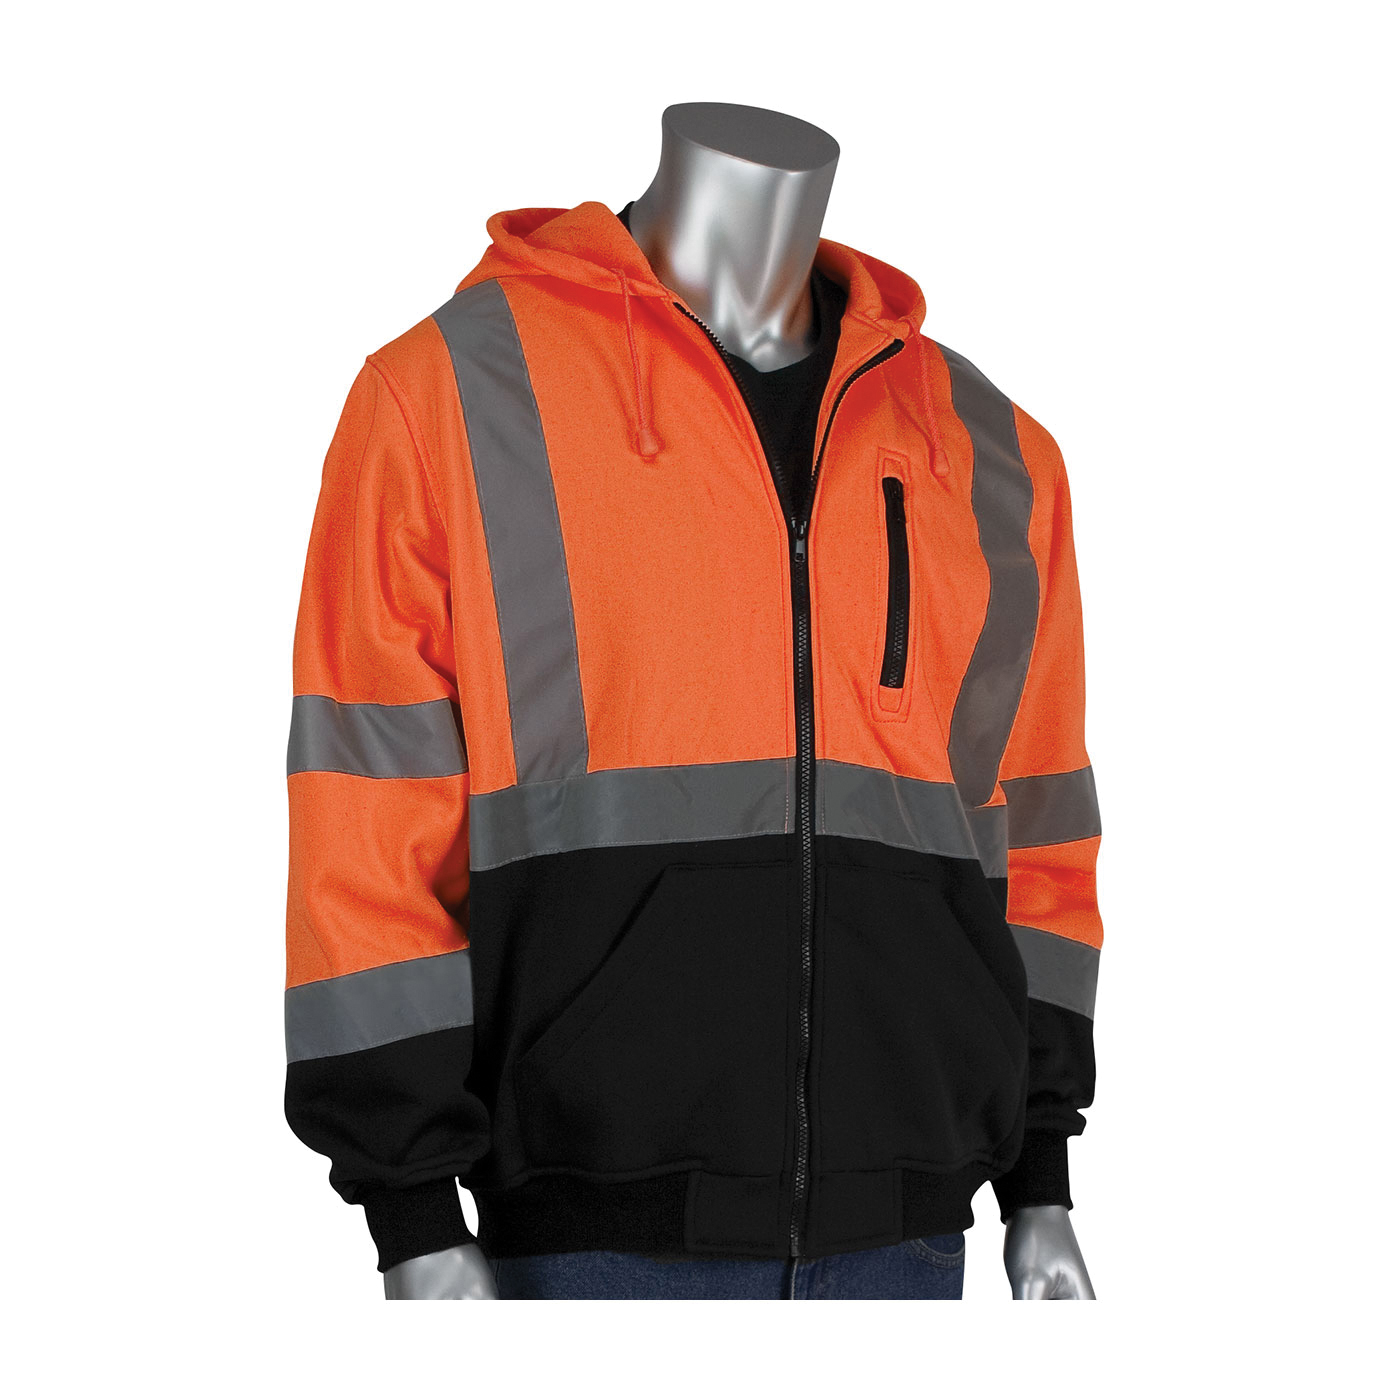 PIP® 323-1370B-OR/S Sweatshirt With Black Bottom, Unisex, S, Orange, Polyester Fleece, 28.3 in L